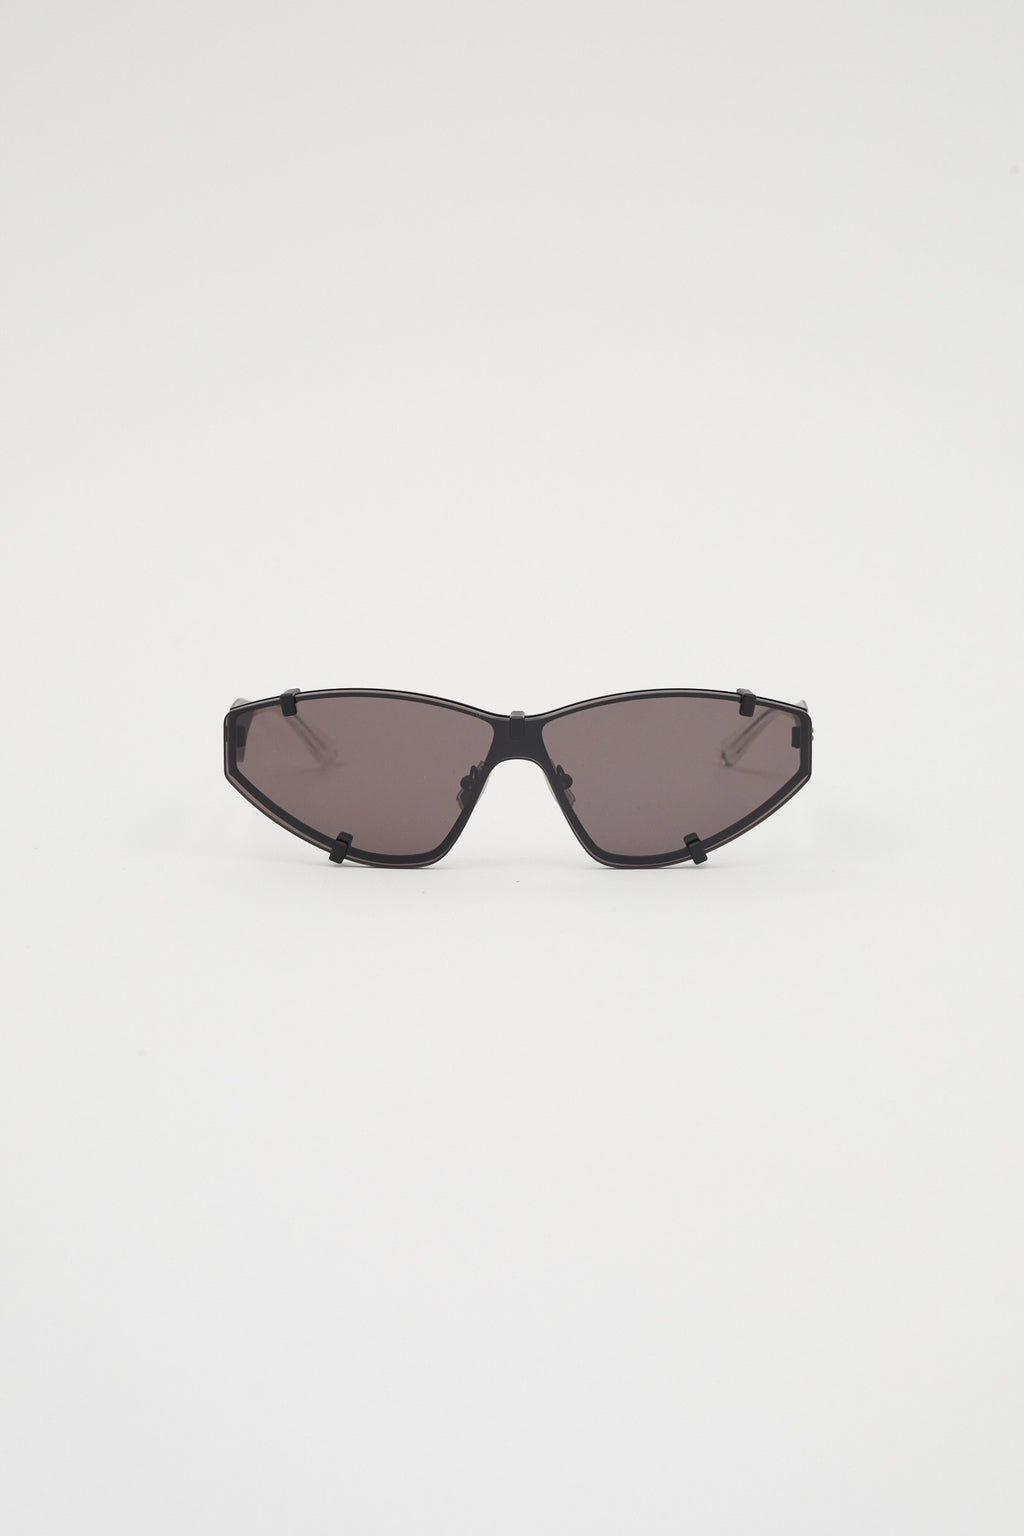 Grip Shield Frame Black Tinted Sunglasses